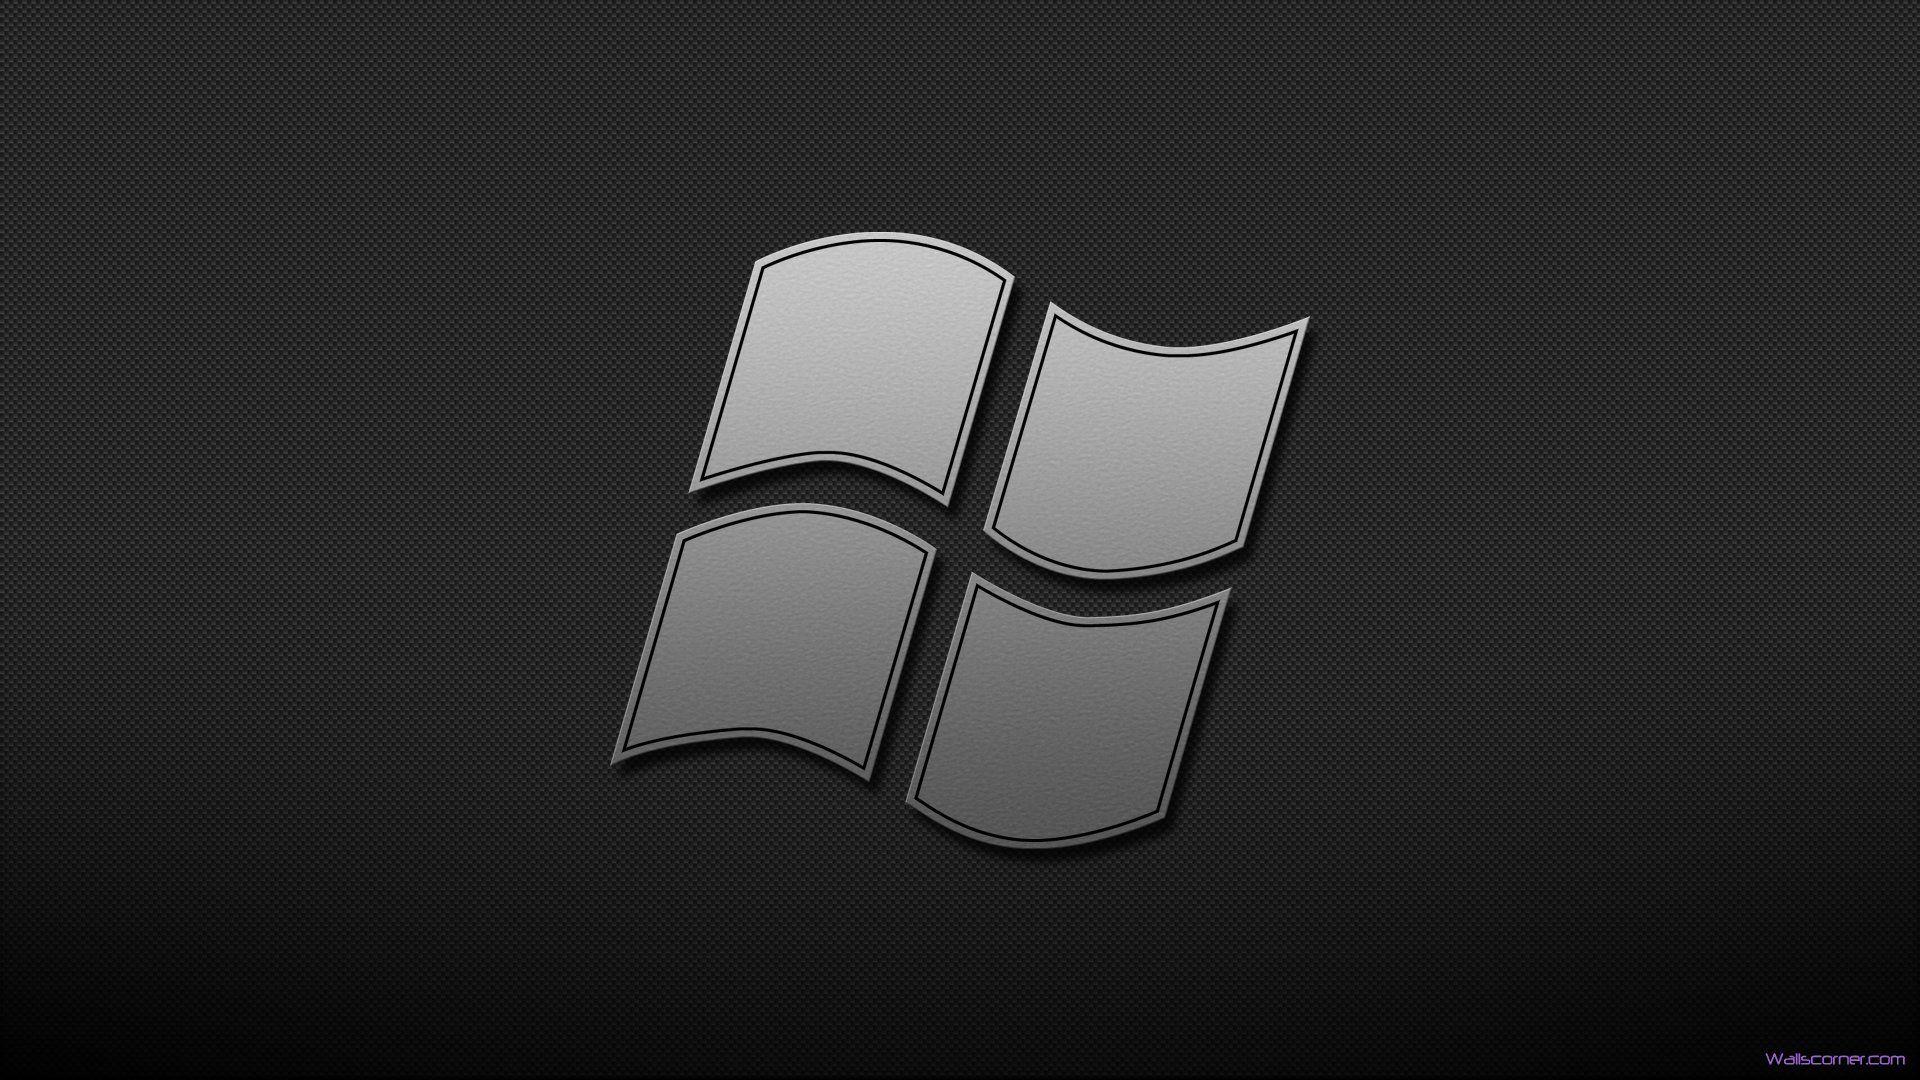 Black and White Windows Logo - Windows Logo Wallpaper